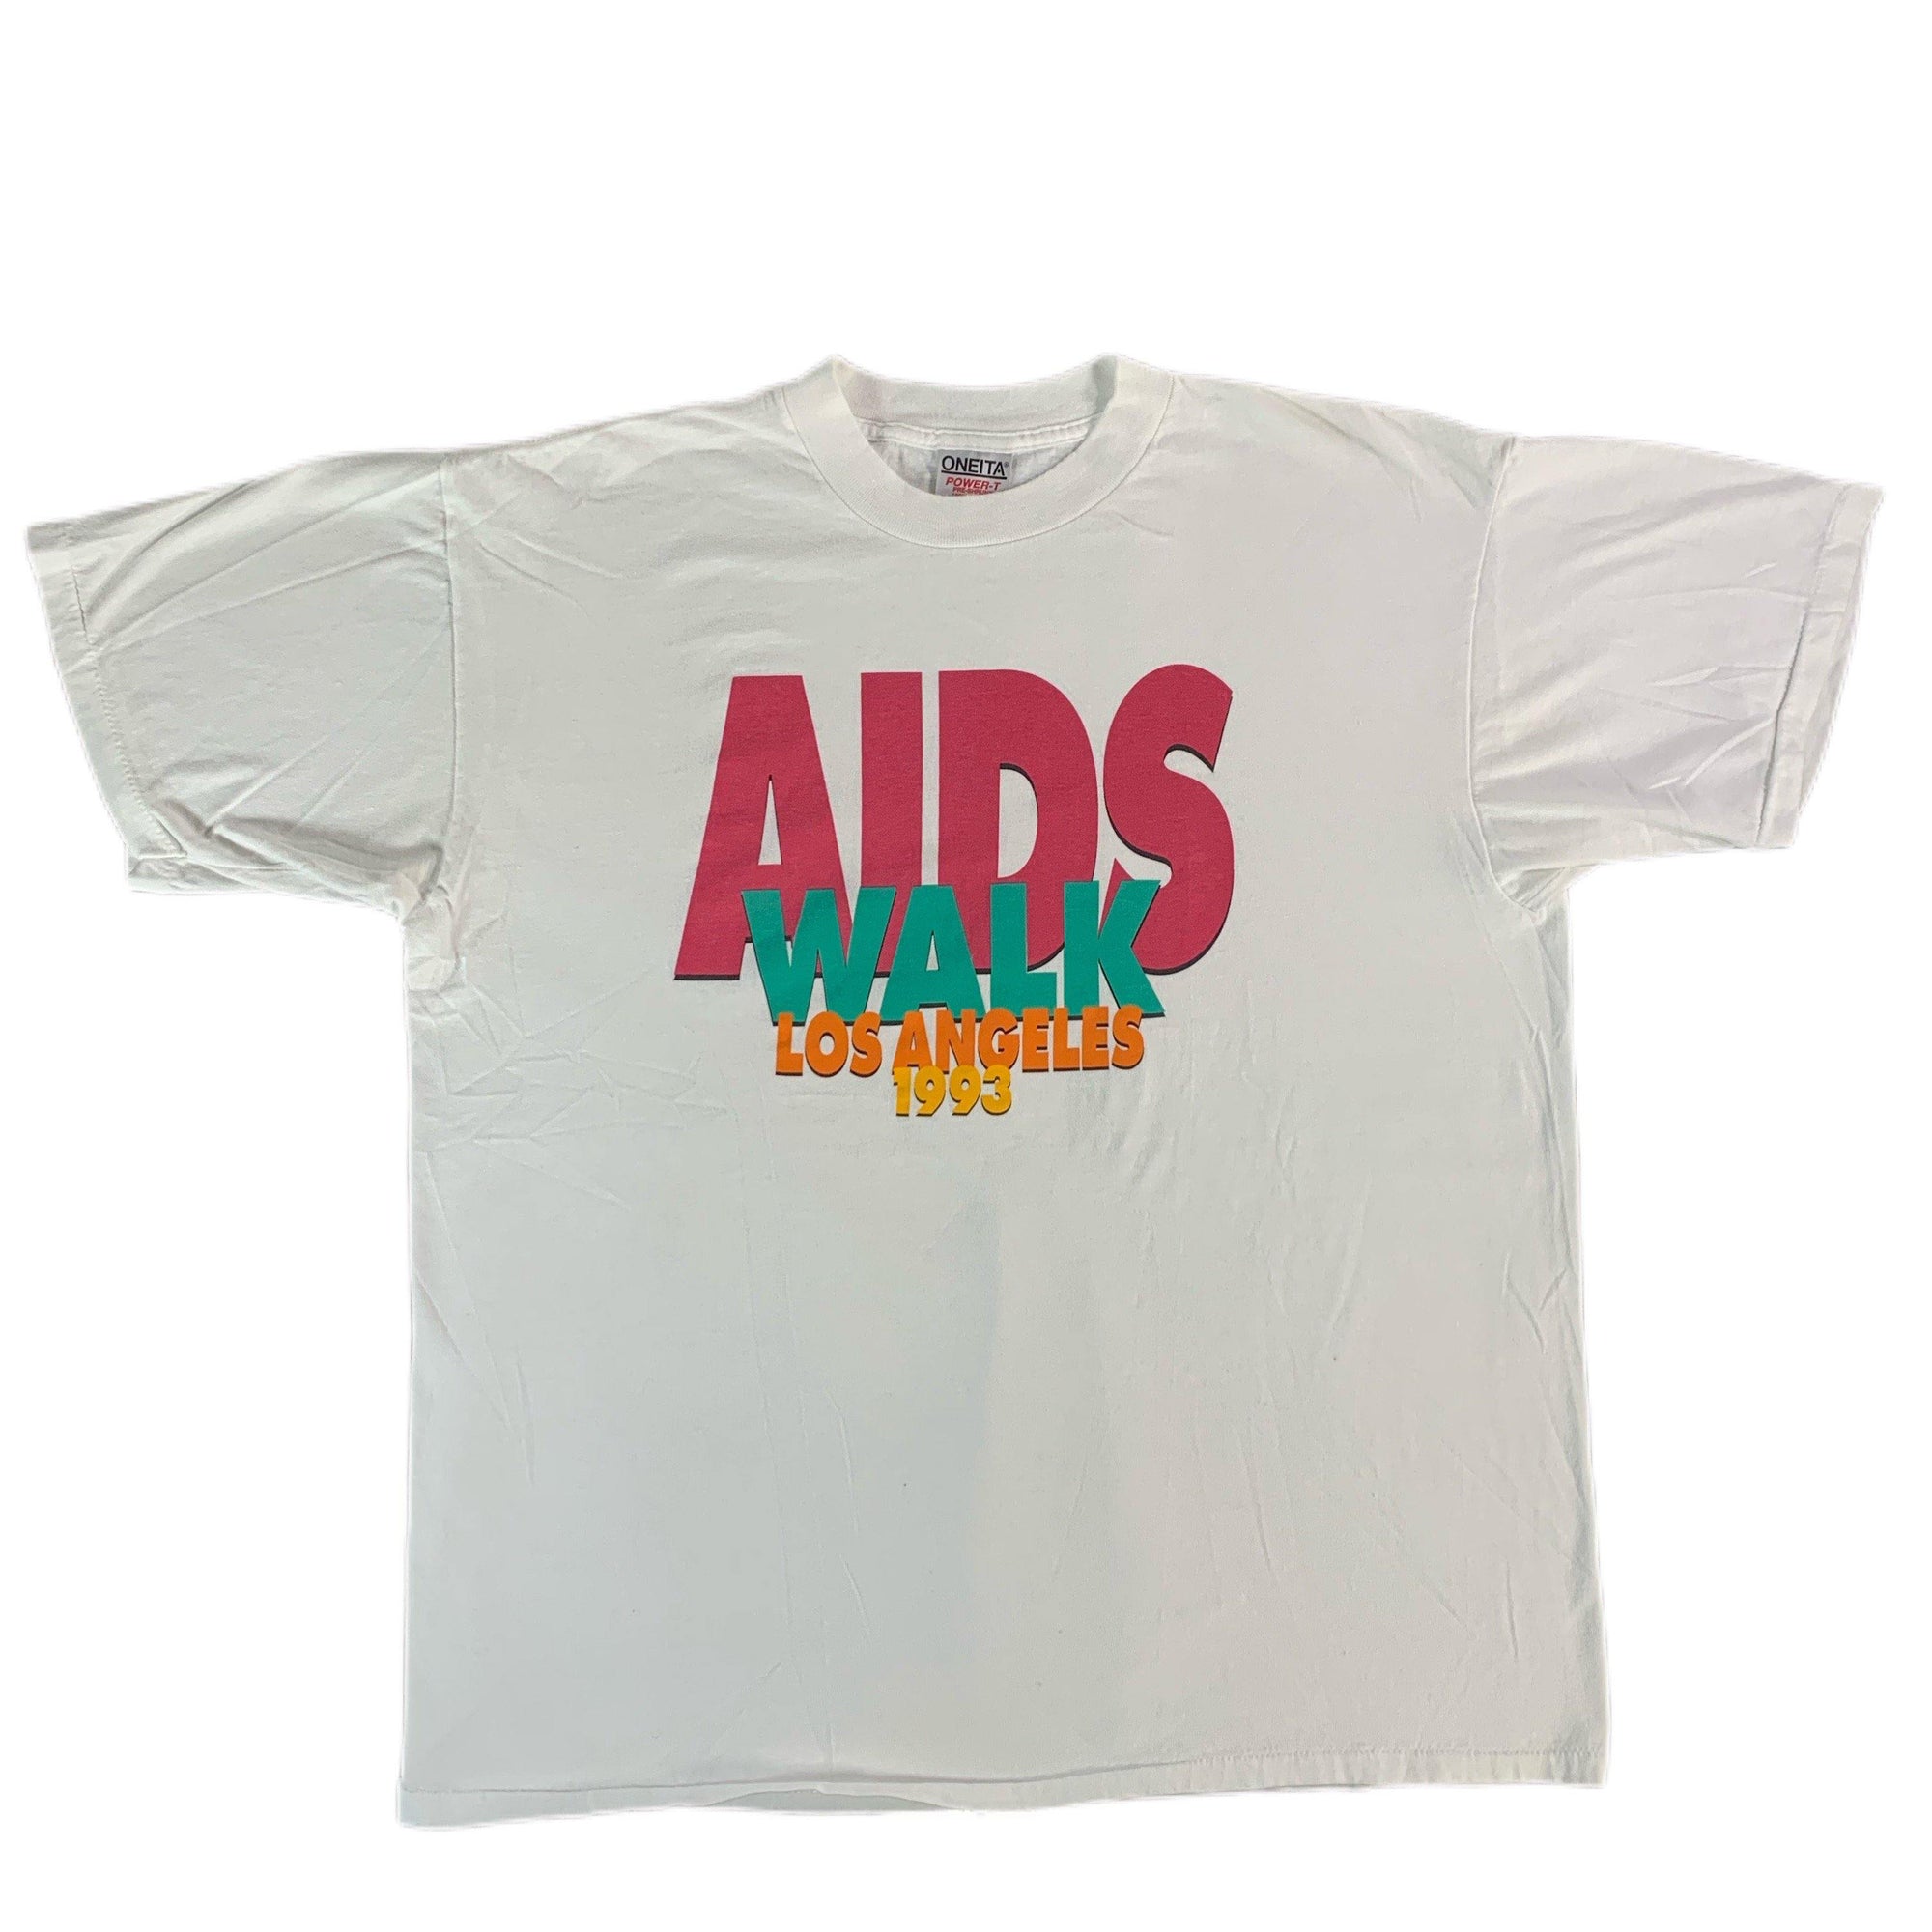 Vintage Los Angeles "AIDS Walk" T-Shirt - jointcustodydc